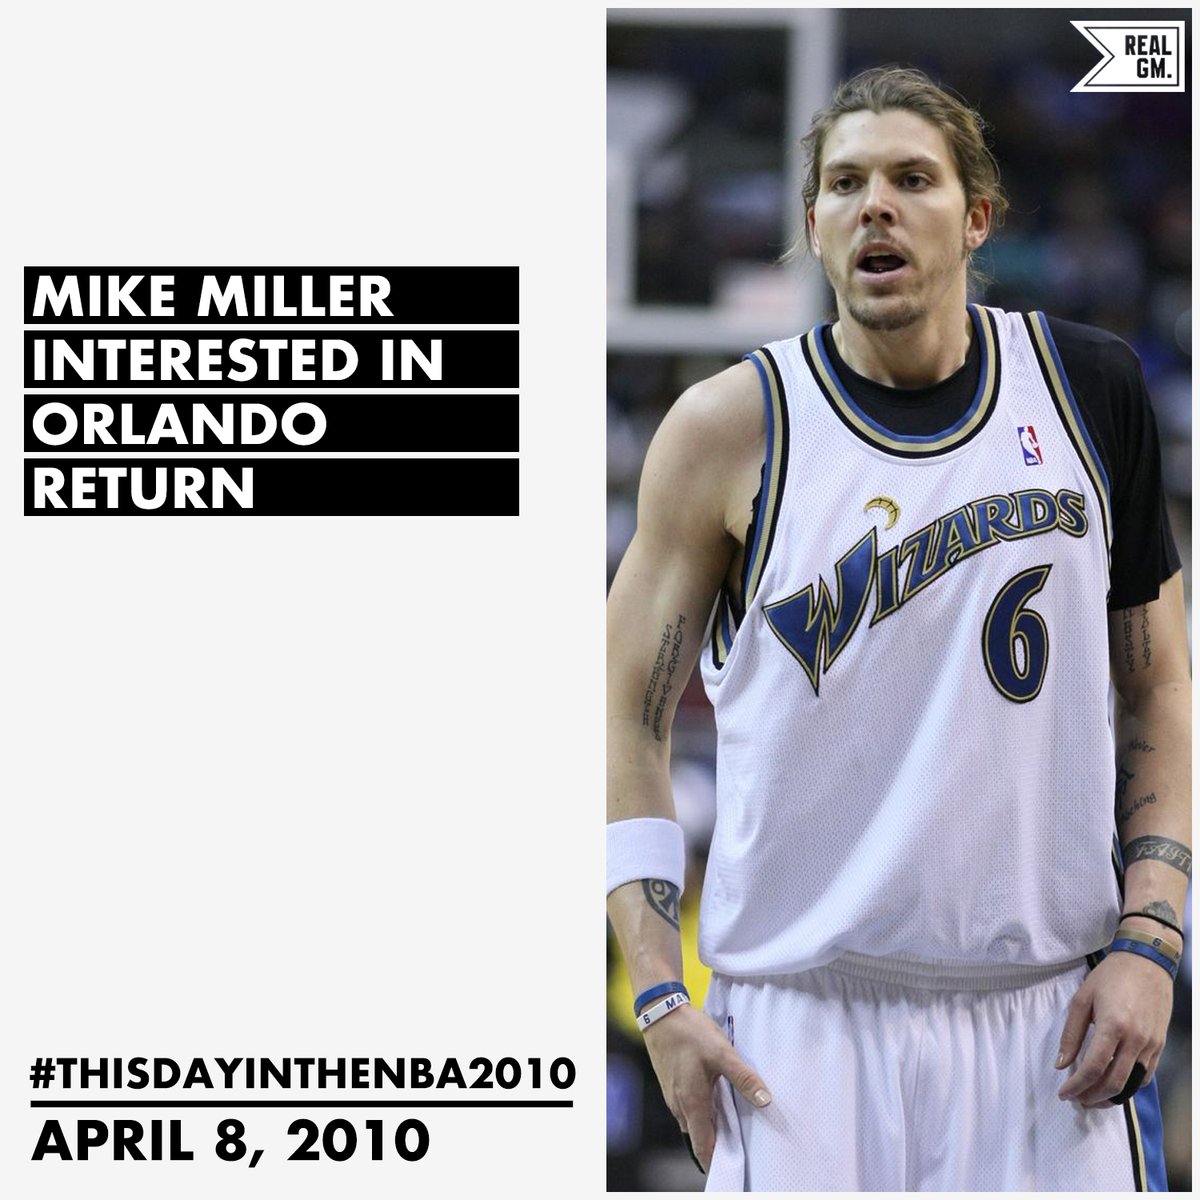  #ThisDayInTheNBA2010April 8, 2010Mike Miller Interested In Orlando Return https://basketball.realgm.com/wiretap/203162/Mike-Miller-Interested-In-Orlando-Return